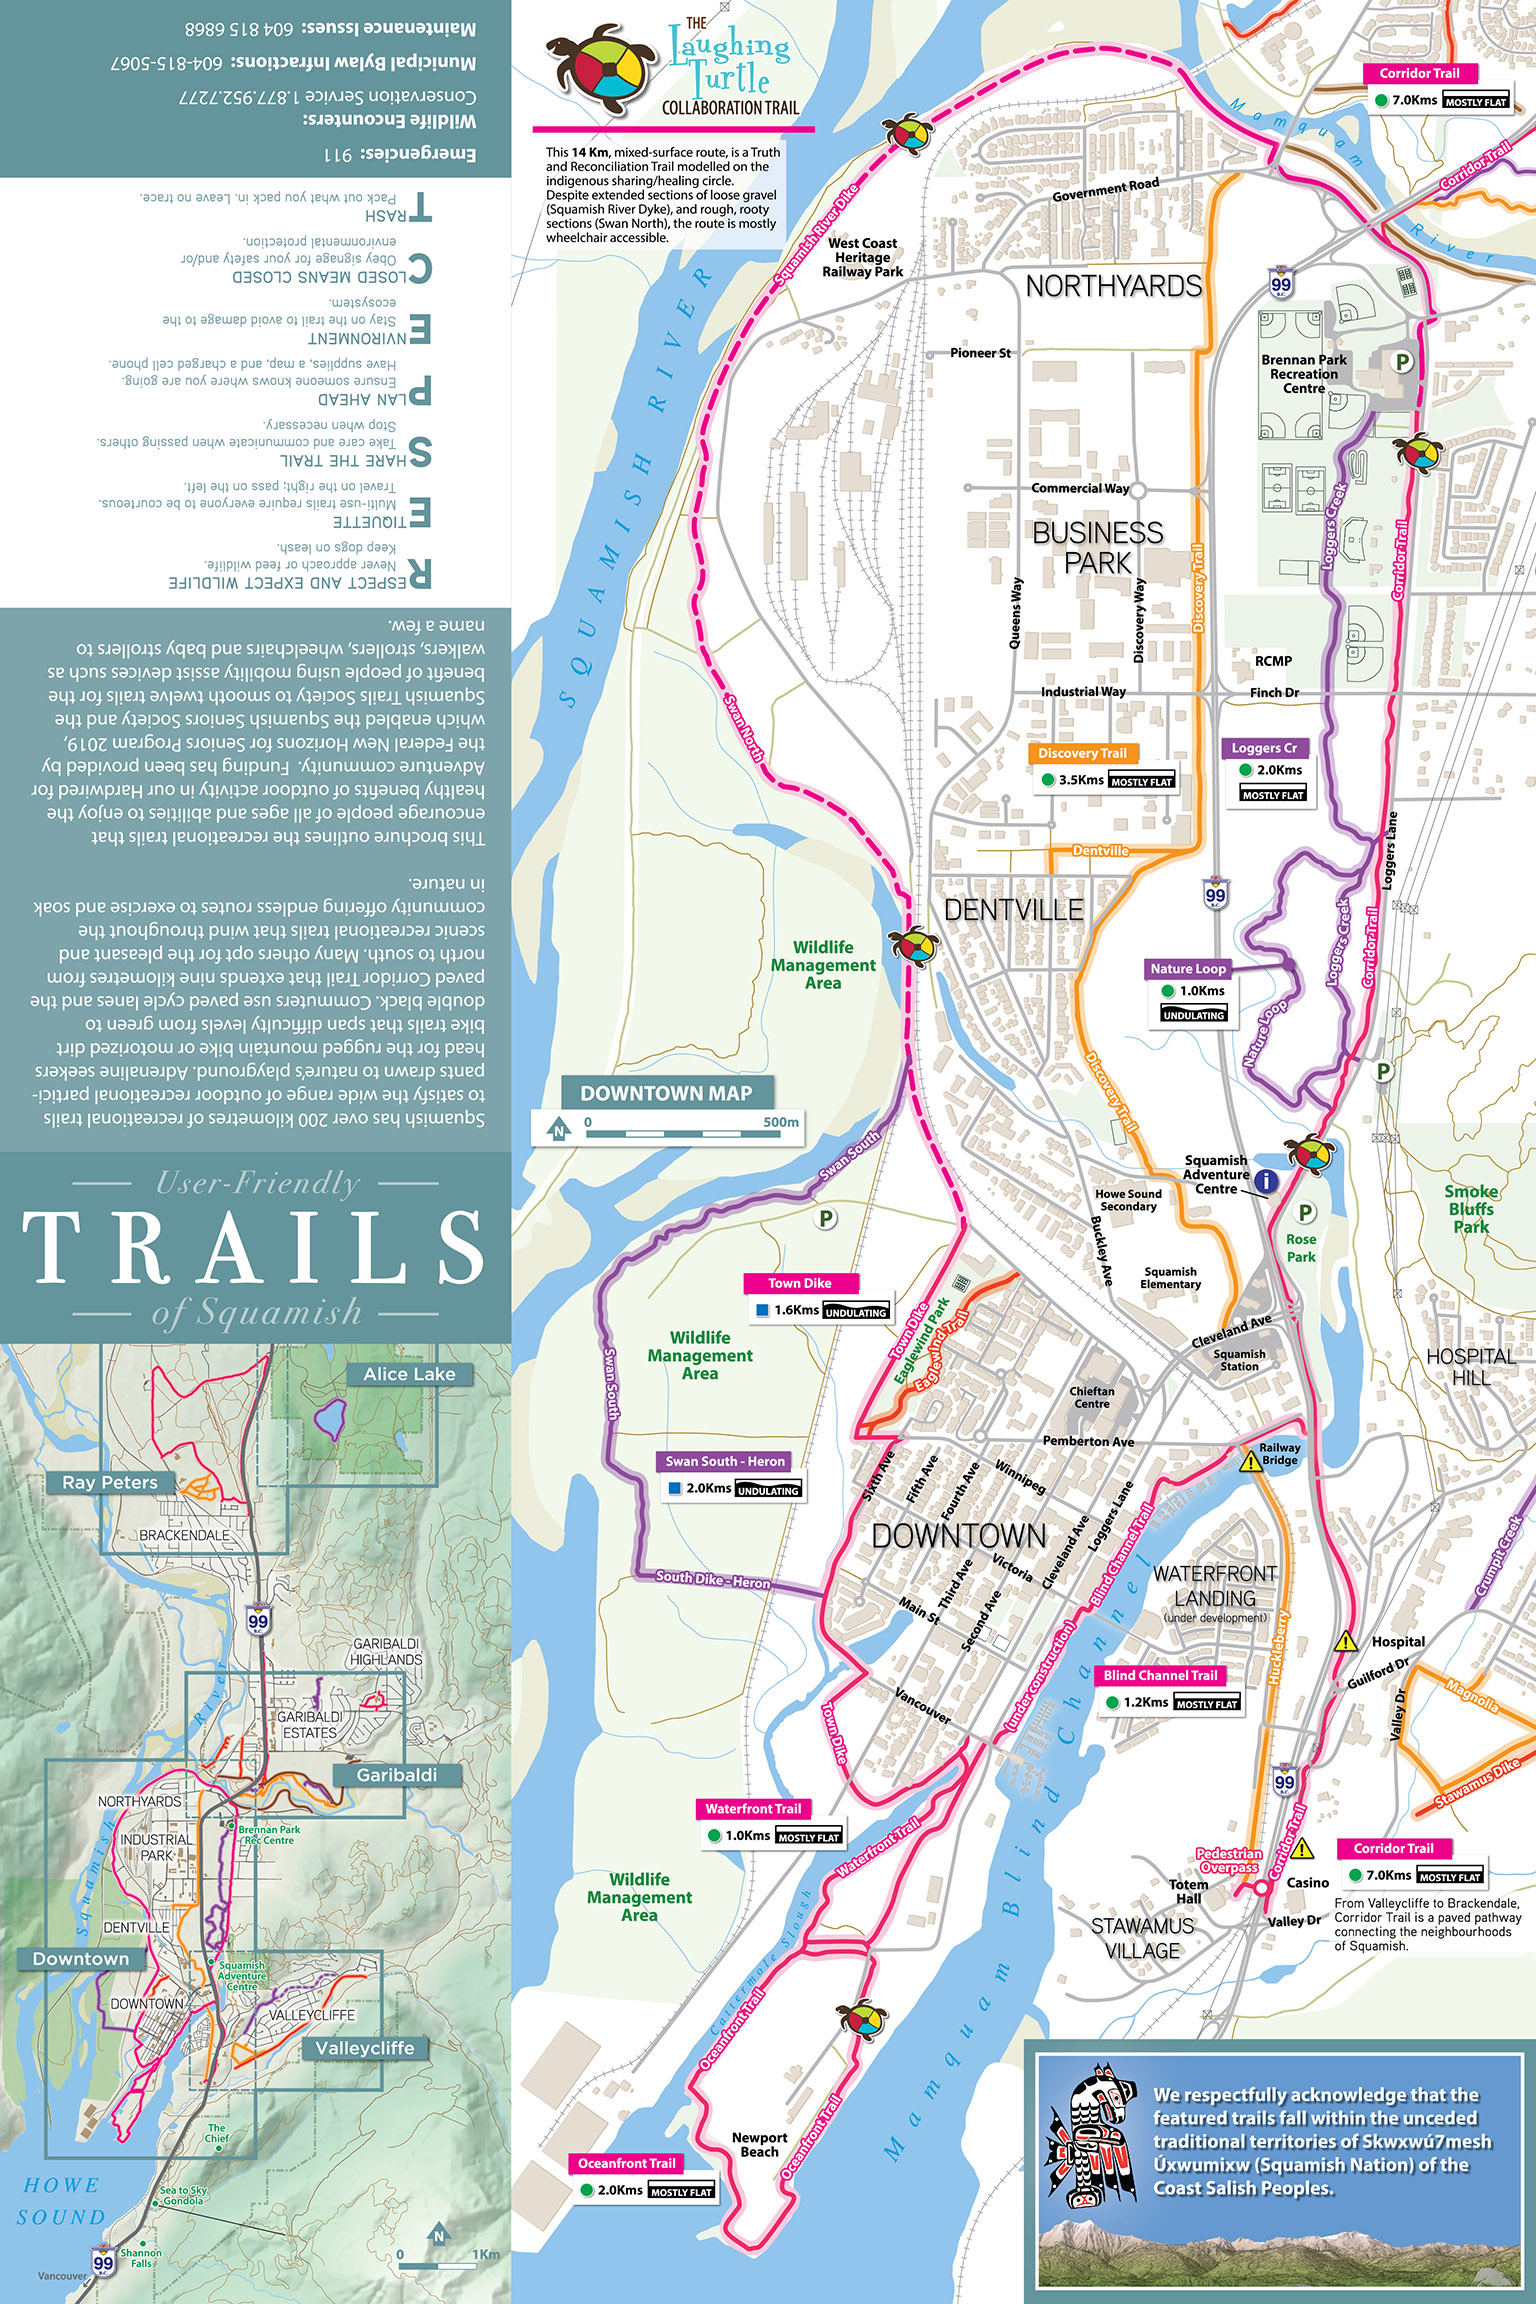 TrailMapps: Tourism Squamish Visitors Brochure